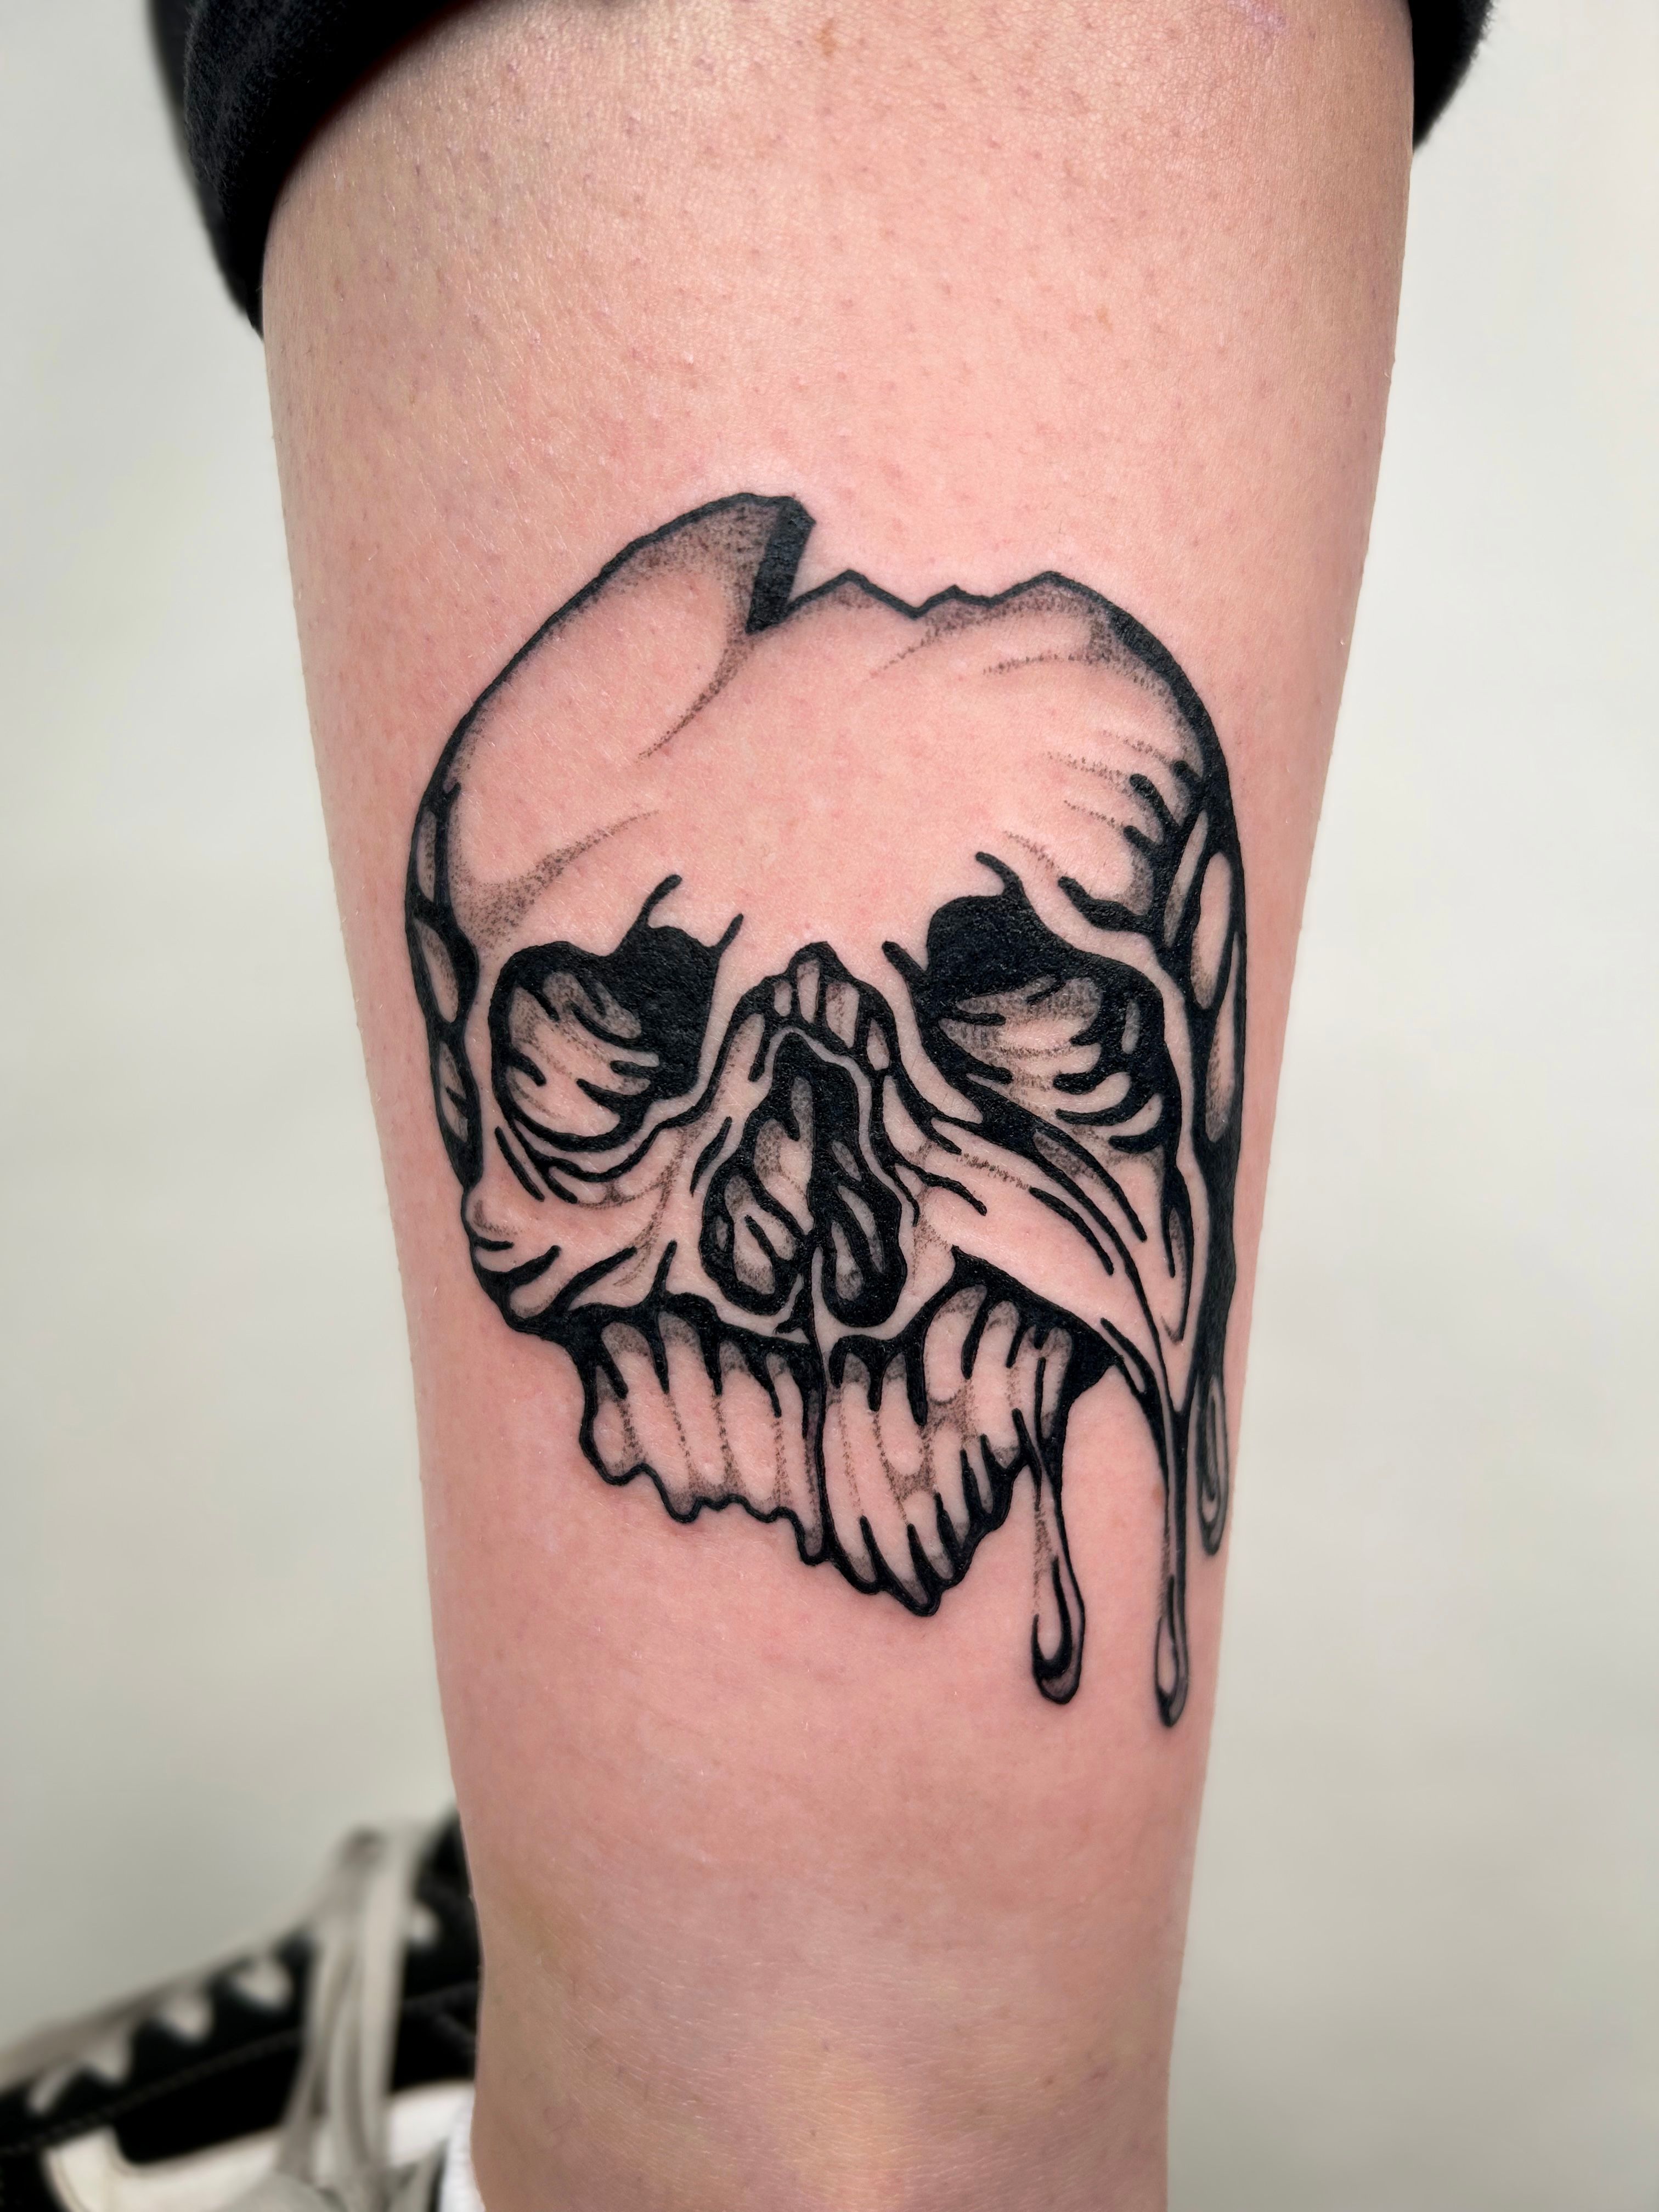 Evil Dead Tattoos: Common Themes, Tattoo Ideas & More